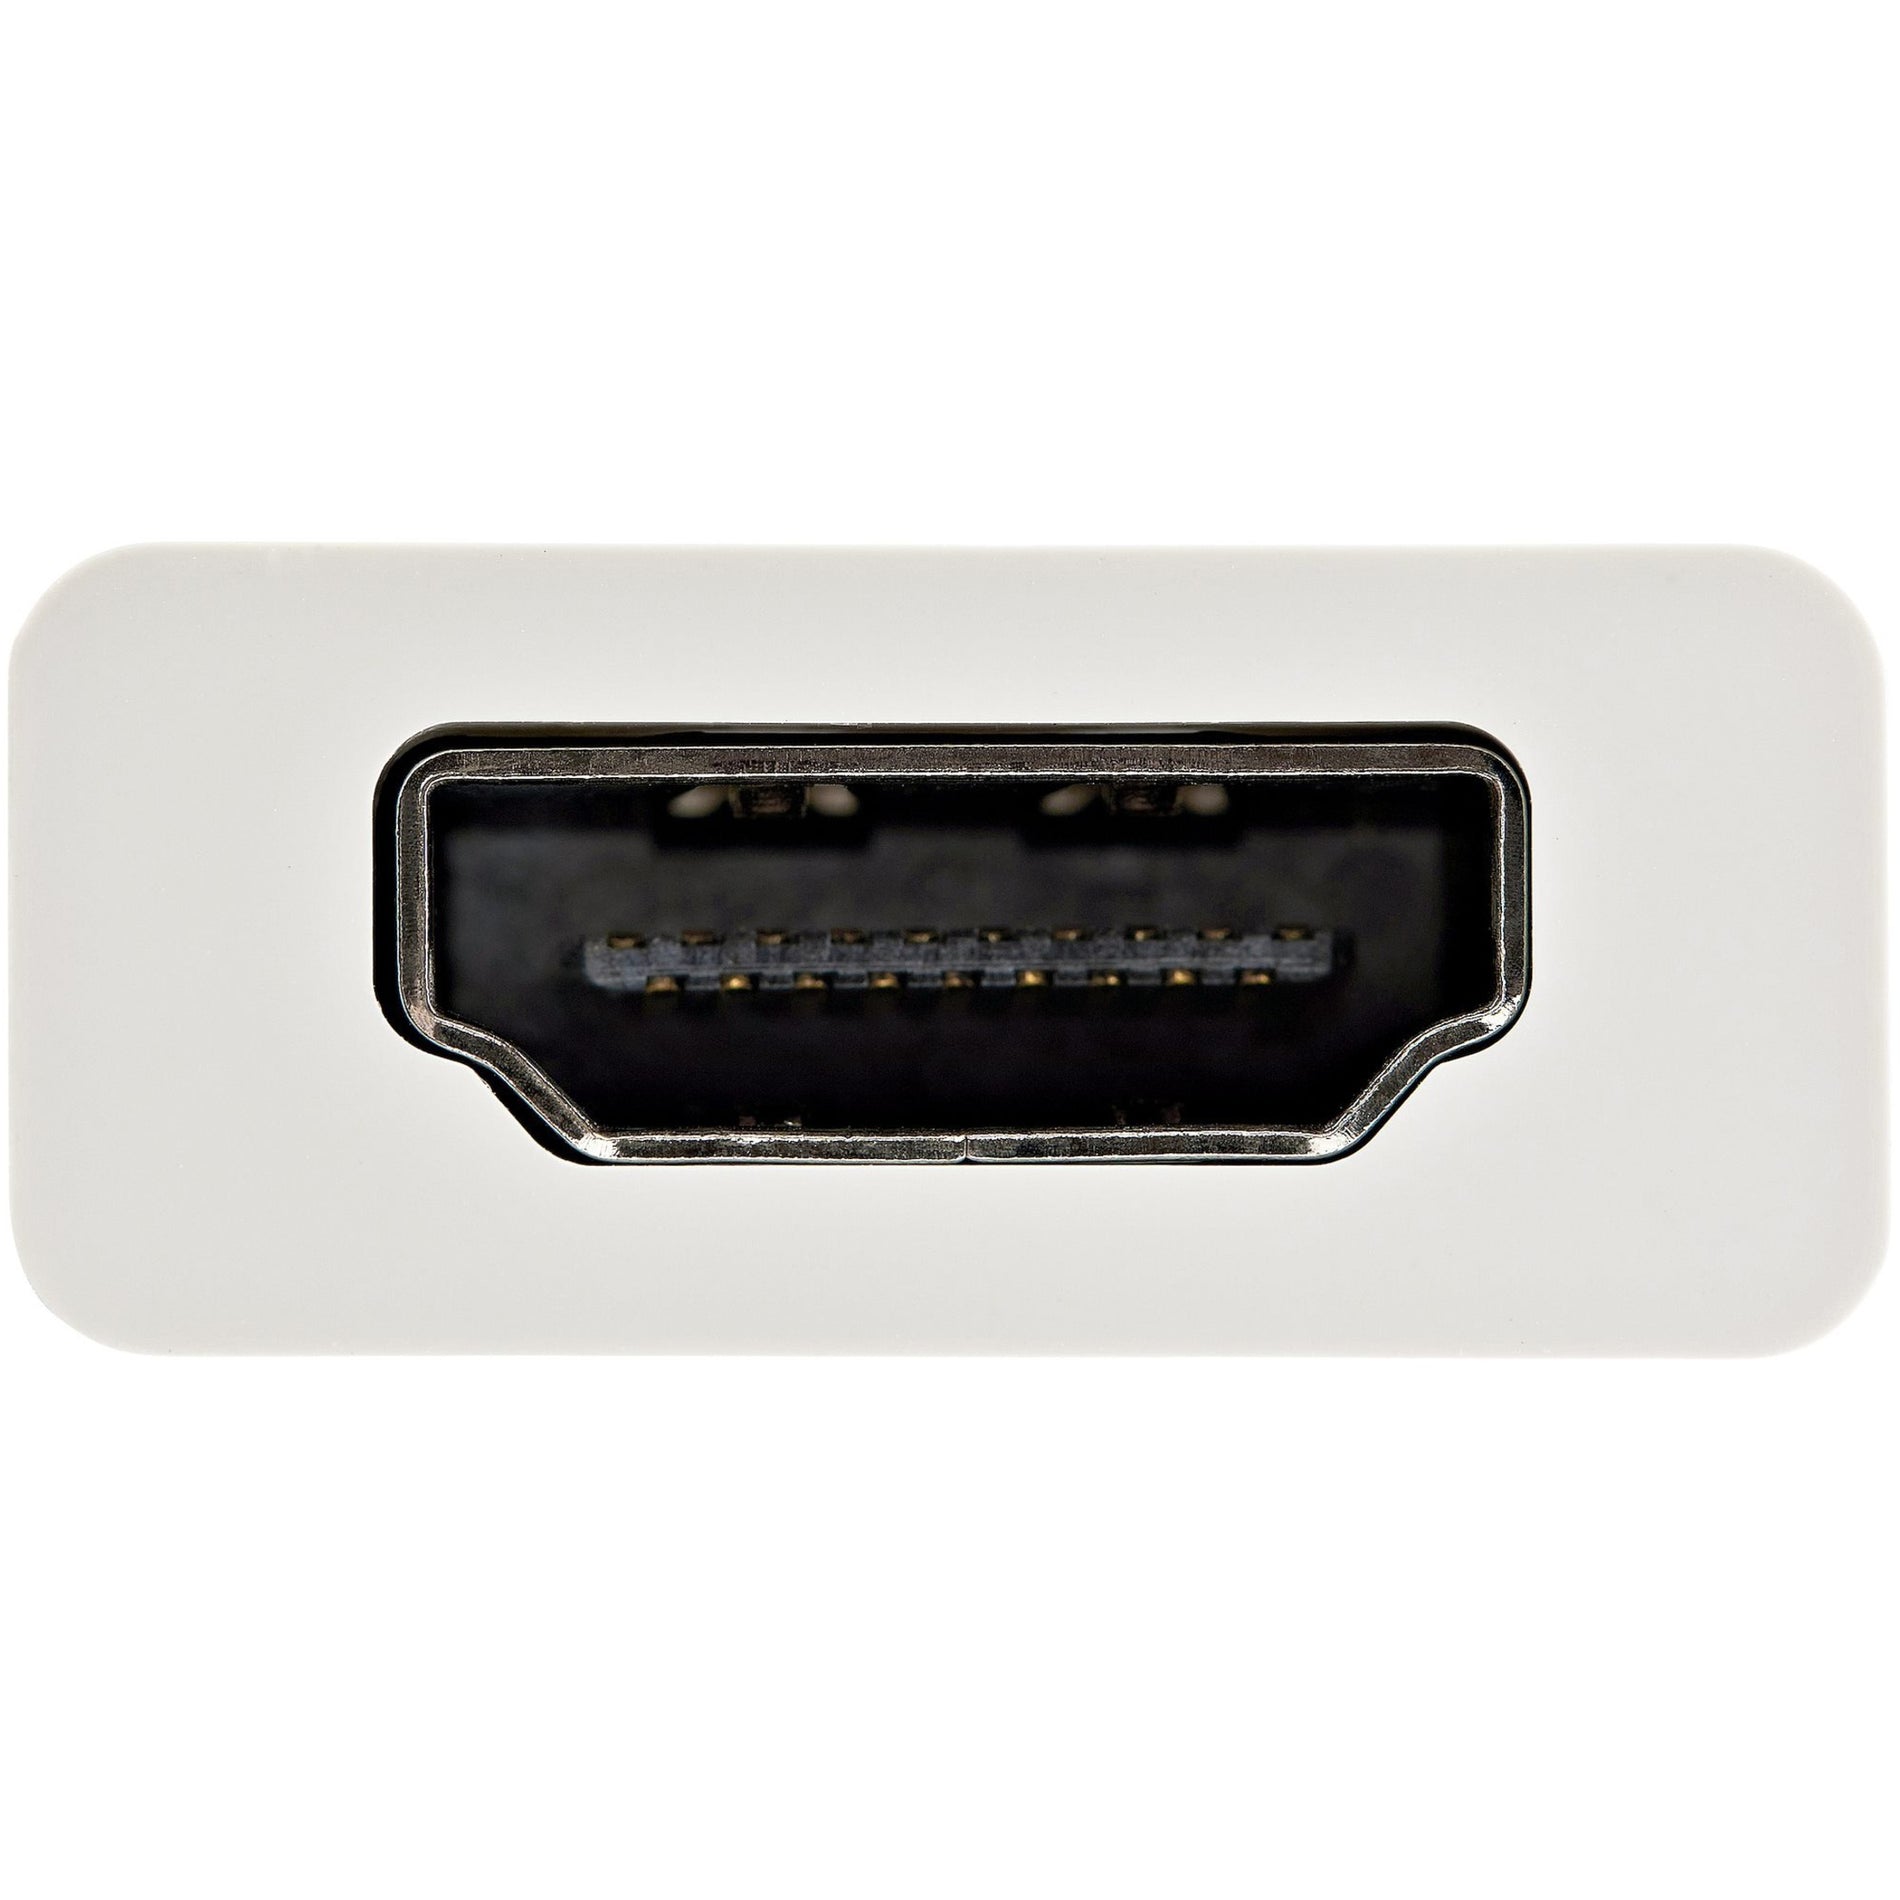 StarTech.com CDP2HD4K60W USB-C to HDMI Adapter - USB Type-C to HDMI Converter, White - 4K 60Hz